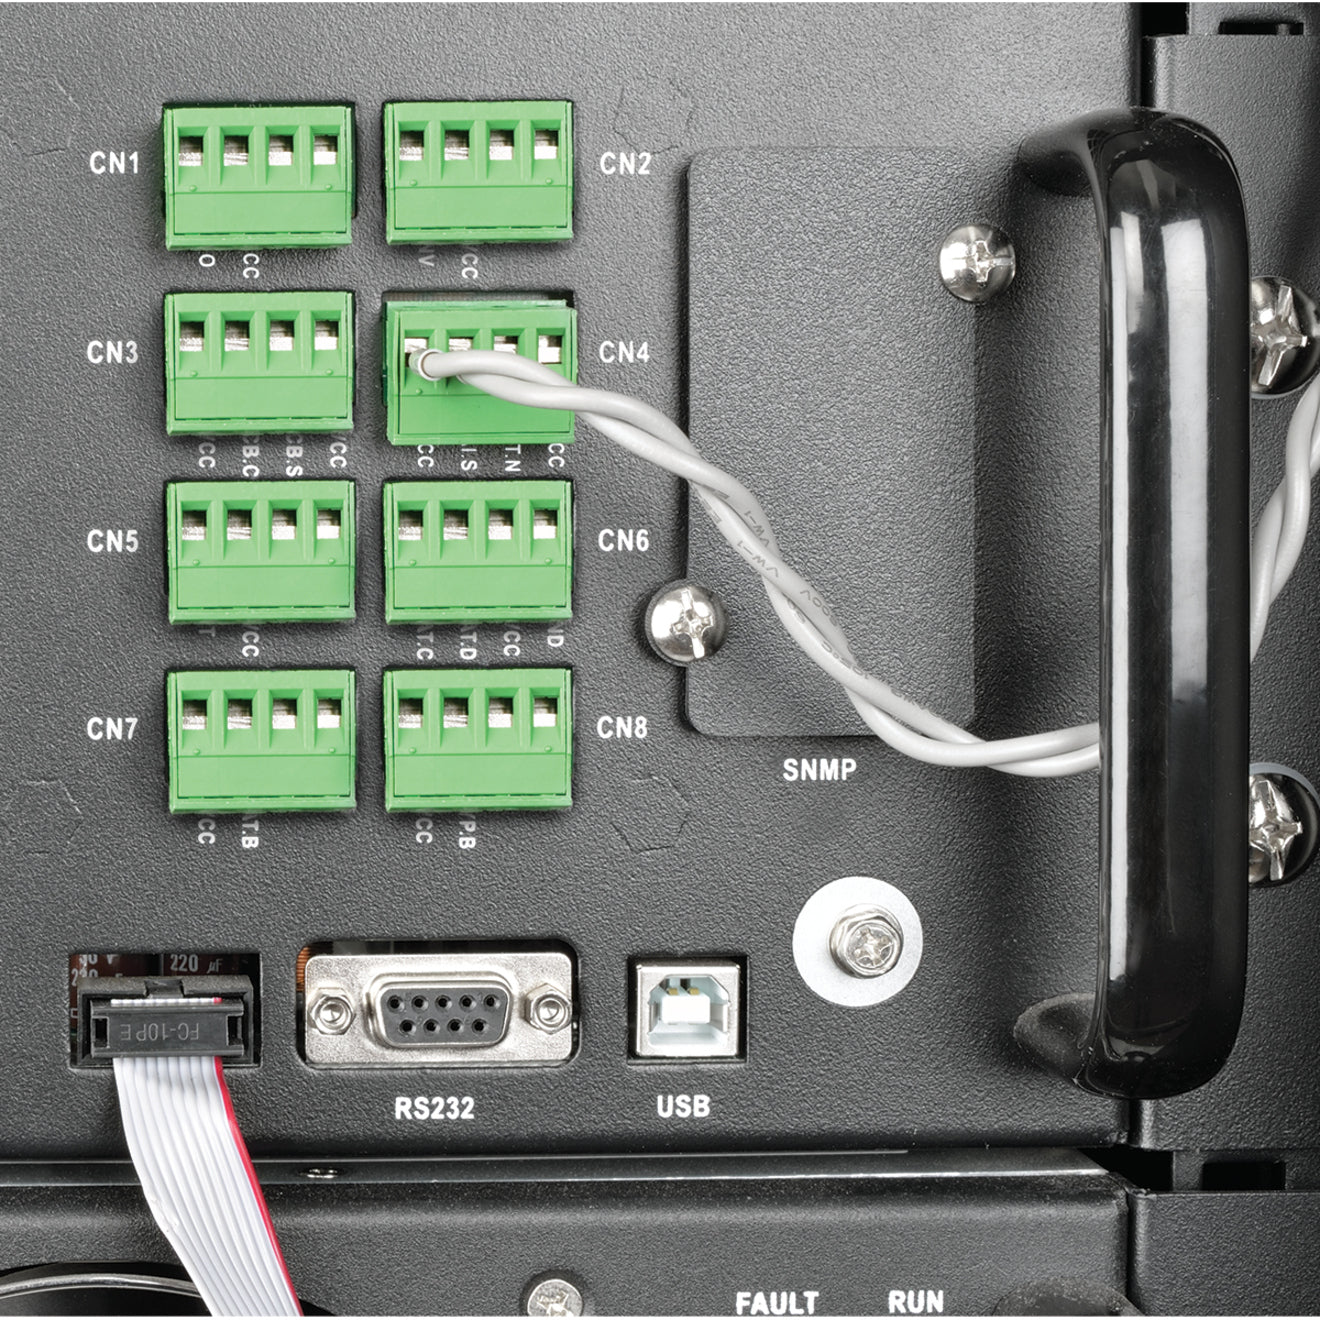 Tripp Lite SmartOnline SVX Series 60kVA 400/230V 50/60Hz Modular Scalable 3-Phase On-Line Double-Conversion Medium-Frame UPS System 5 Battery Modules